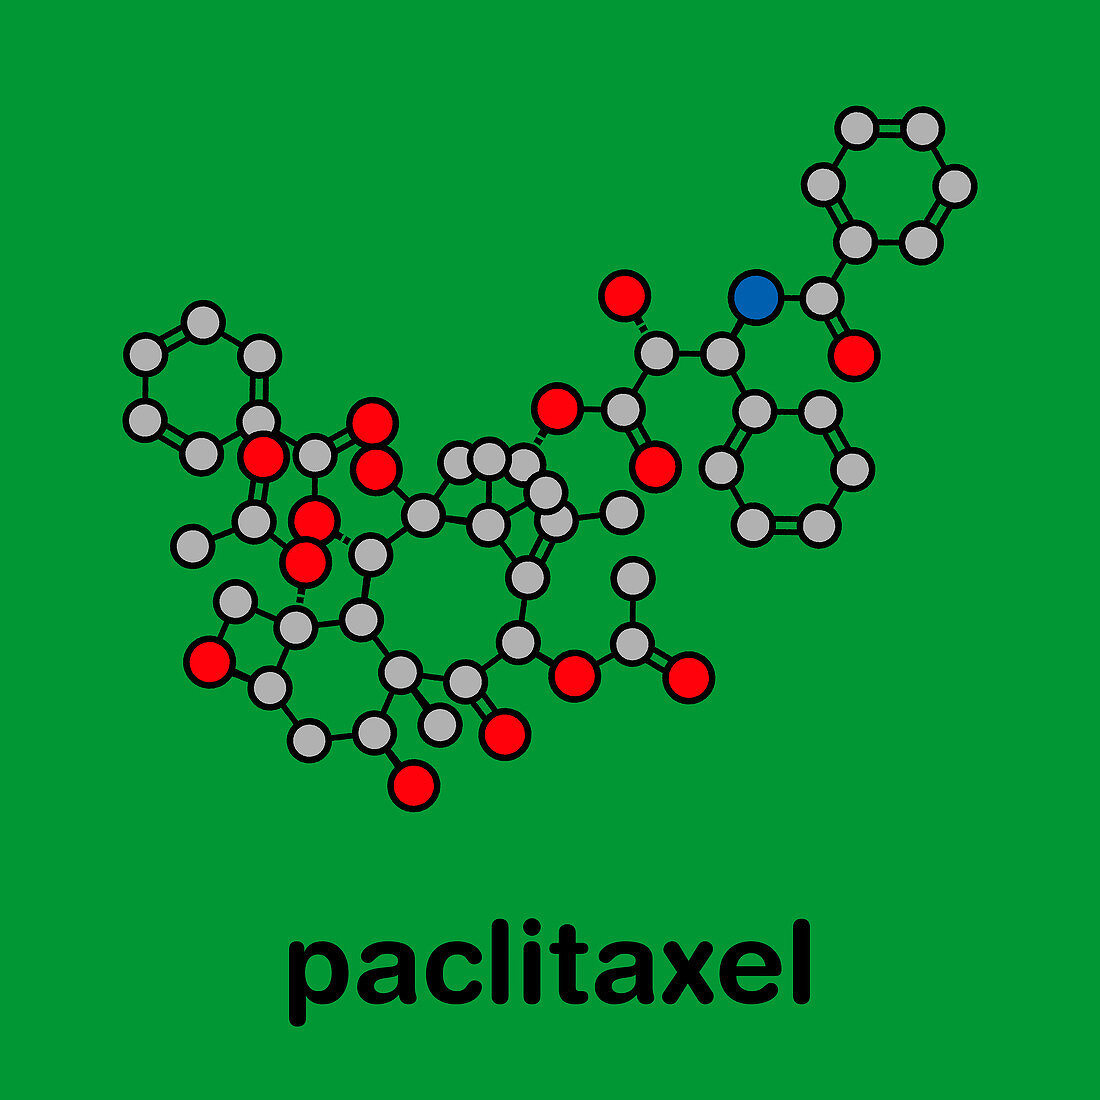 Paclitaxel chemotherapy drug, molecular model